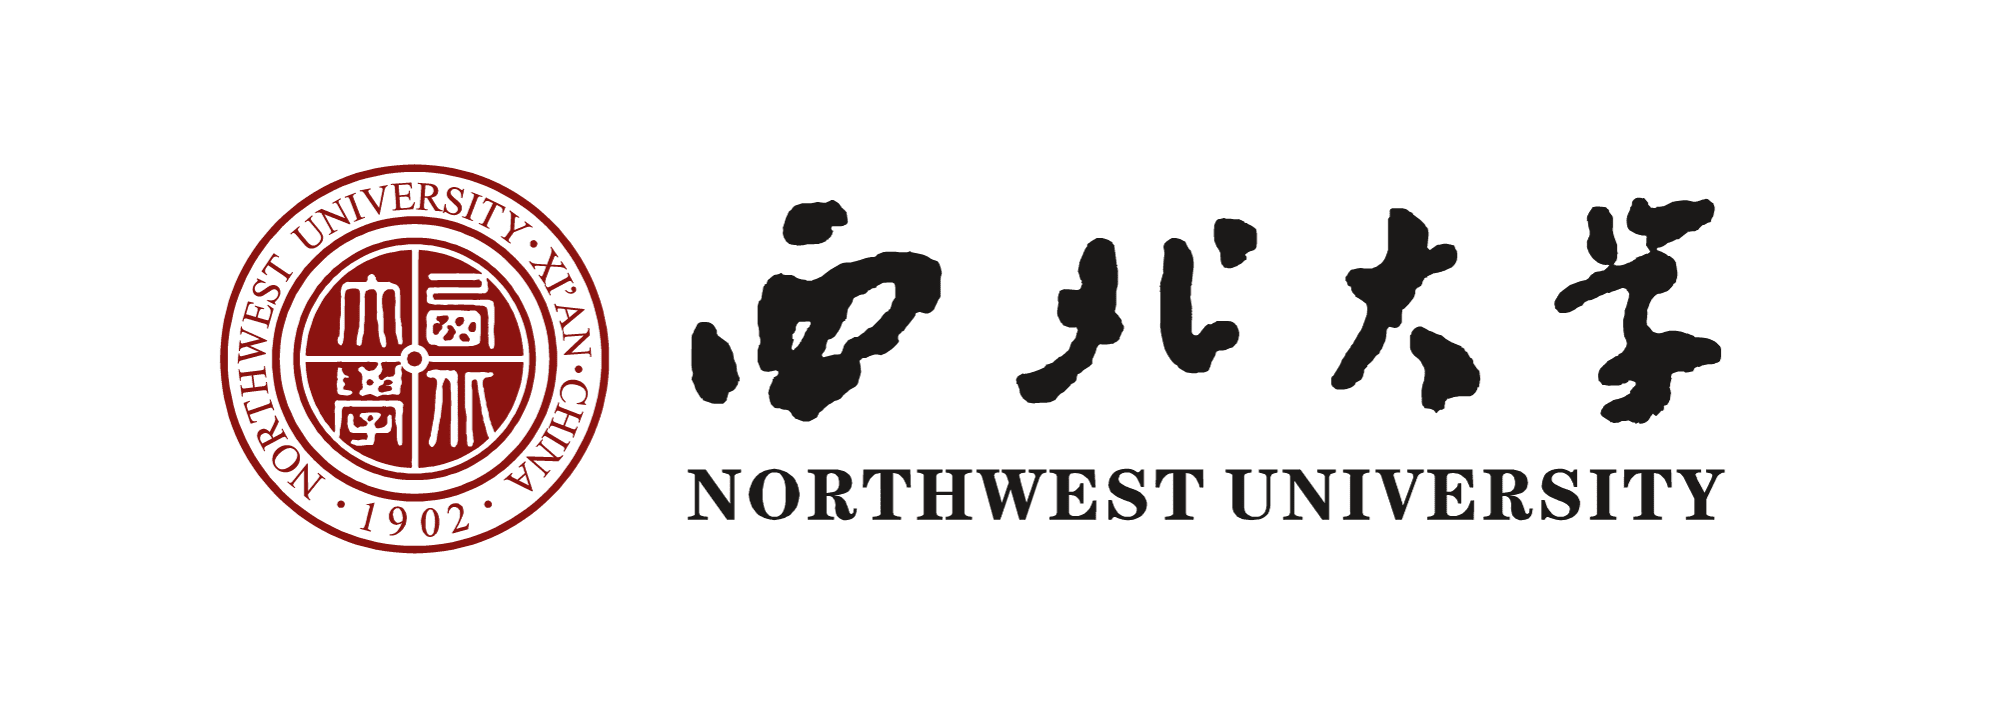 12_Northwest University_logo